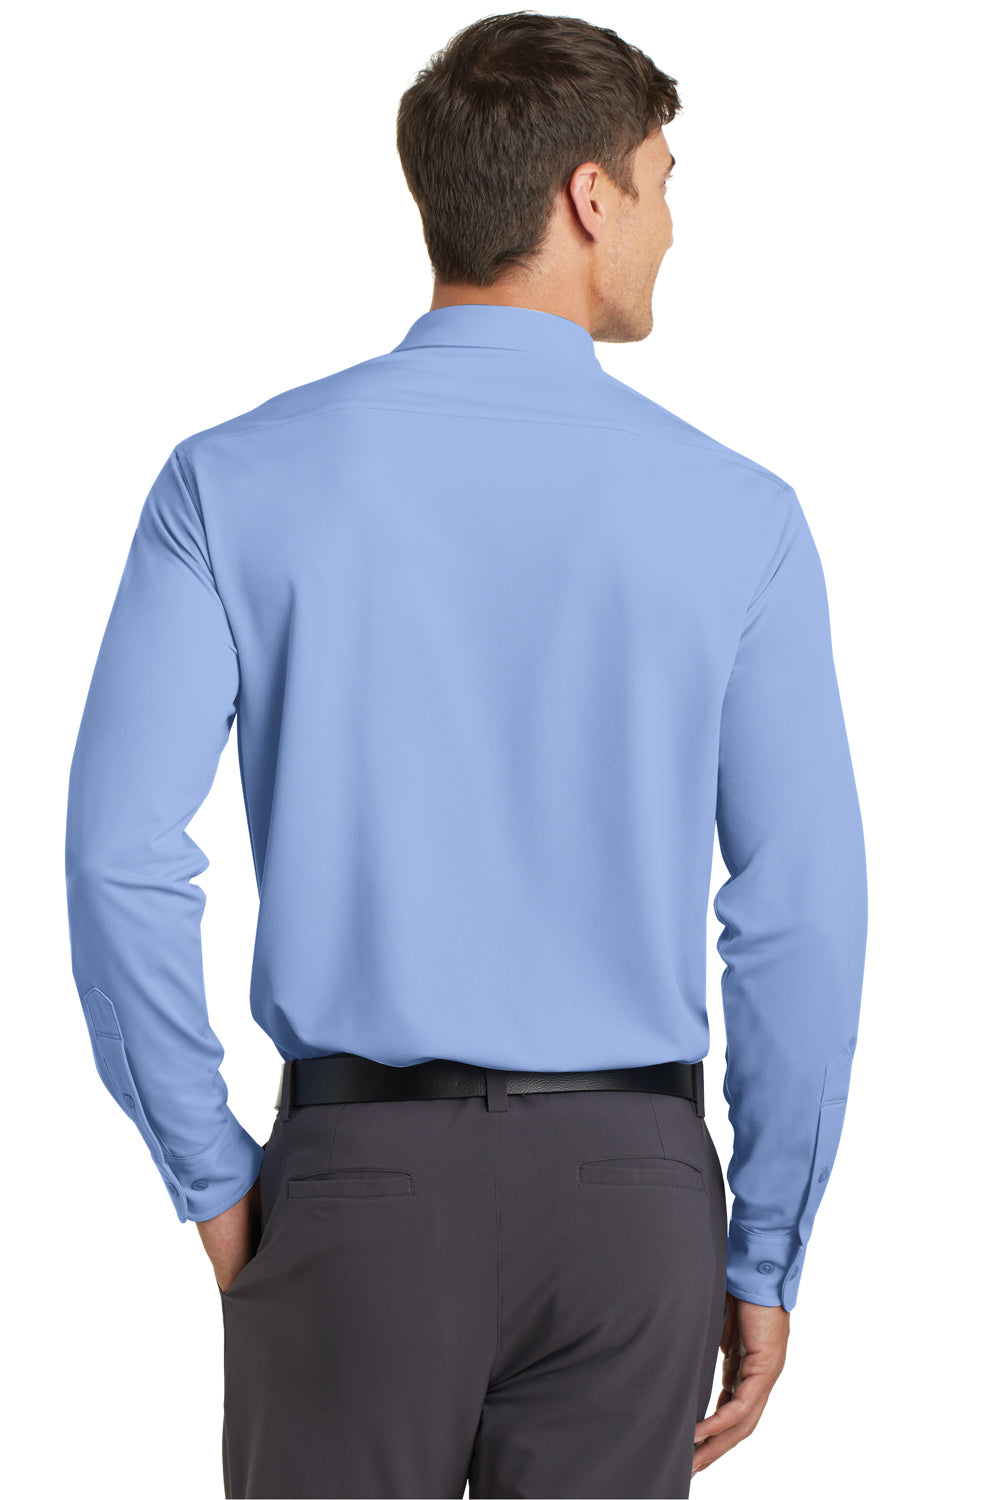 Port Authority K570 Mens Dimension Moisture Wicking Long Sleeve Button Down Shirt w/ Pocket Dress Shirt Blue Back